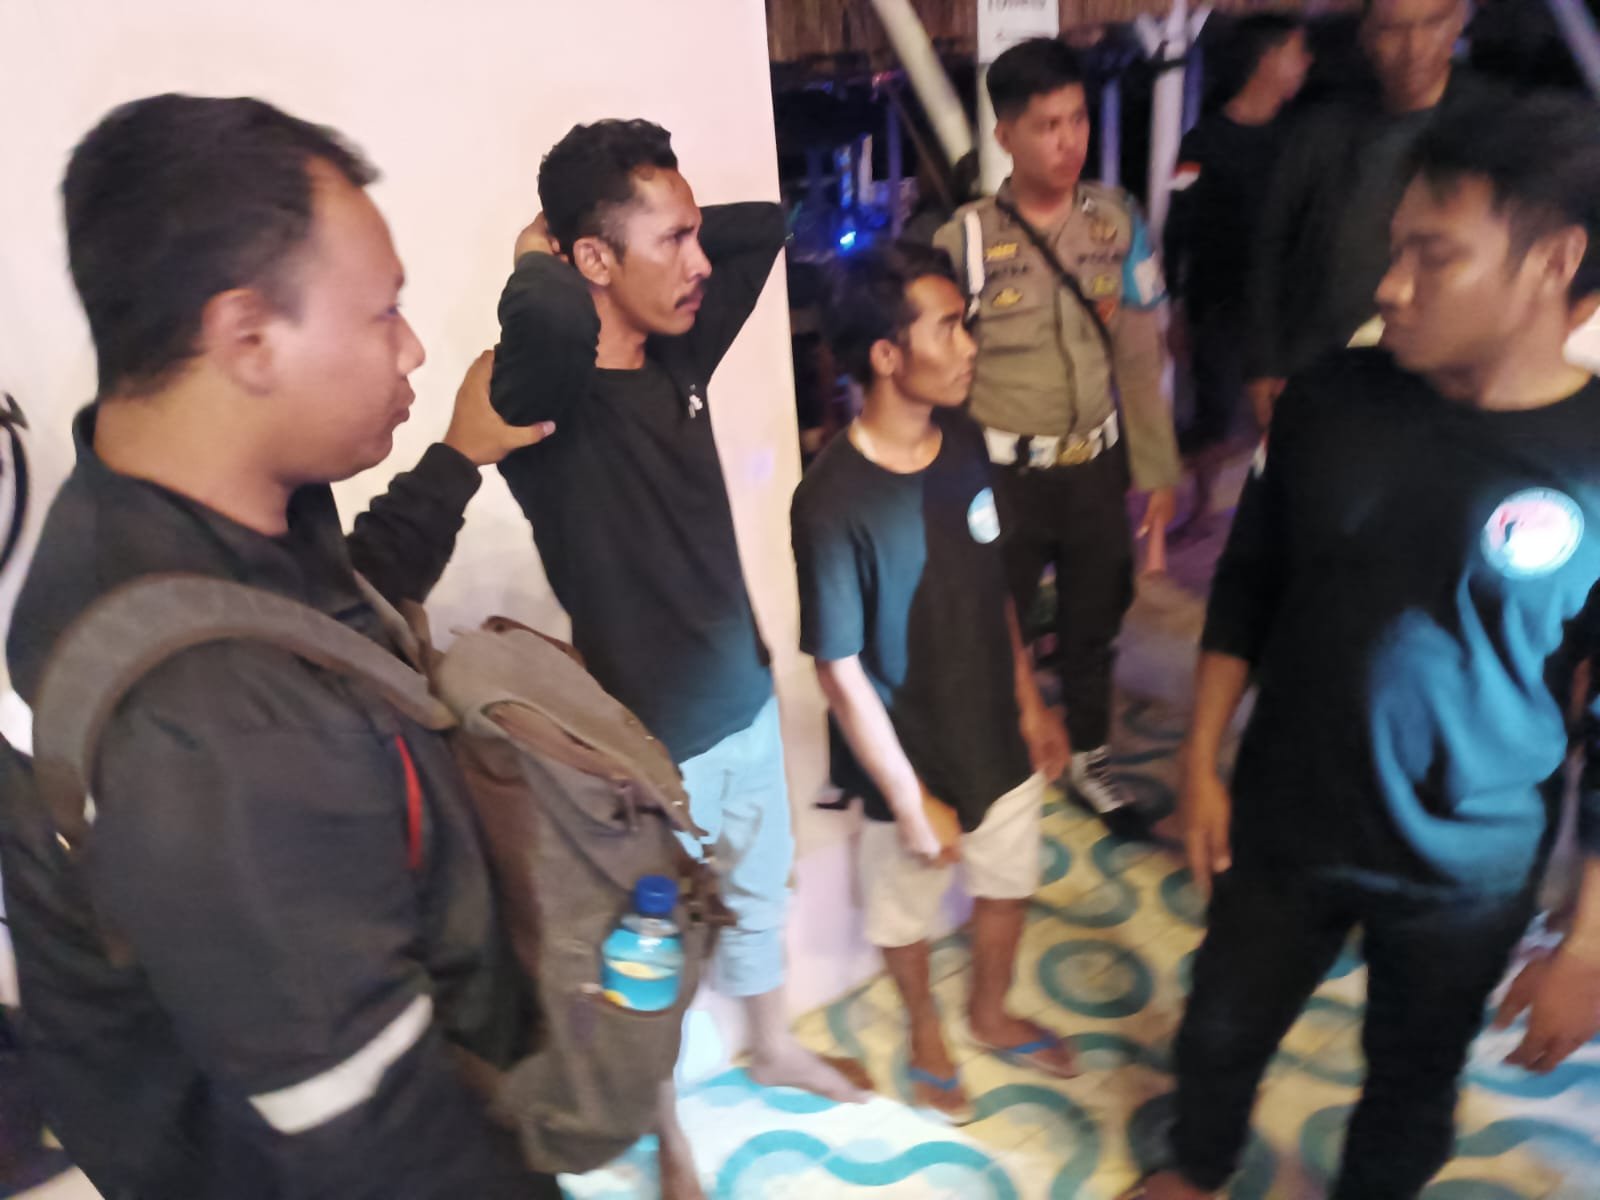 Tes Urine Positif Narkoba, Warga Dusun Gili Ditangkap di tempat Hiburan Malam